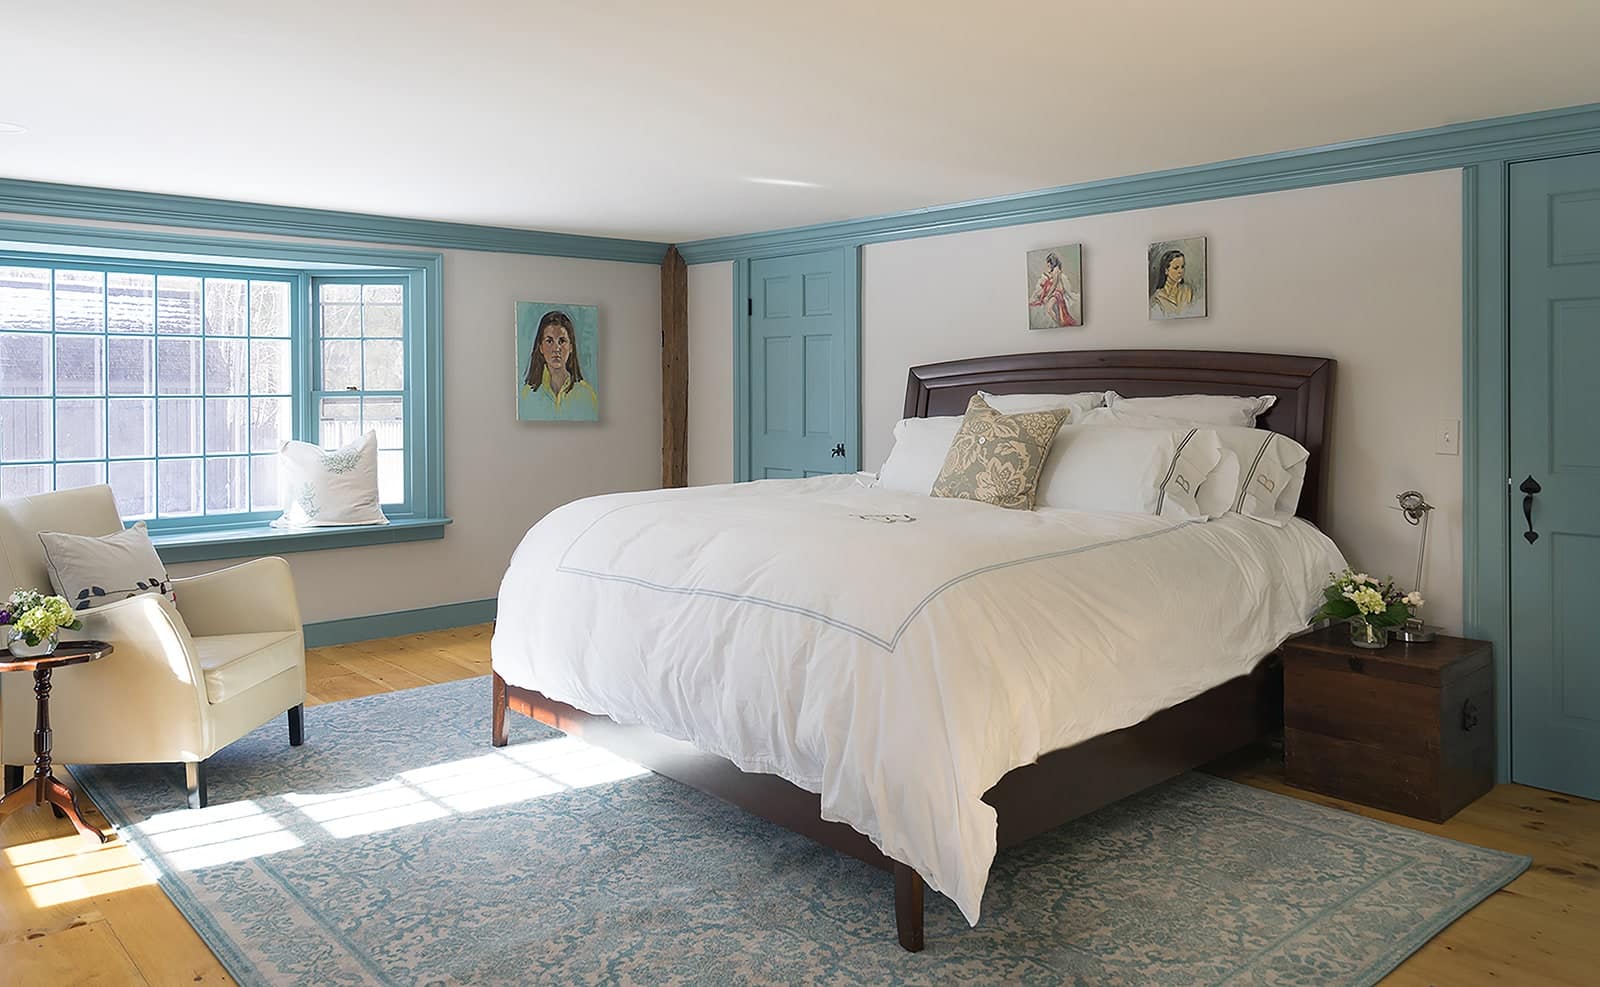 New Hampshire Homestead Historic Interior Bedroom